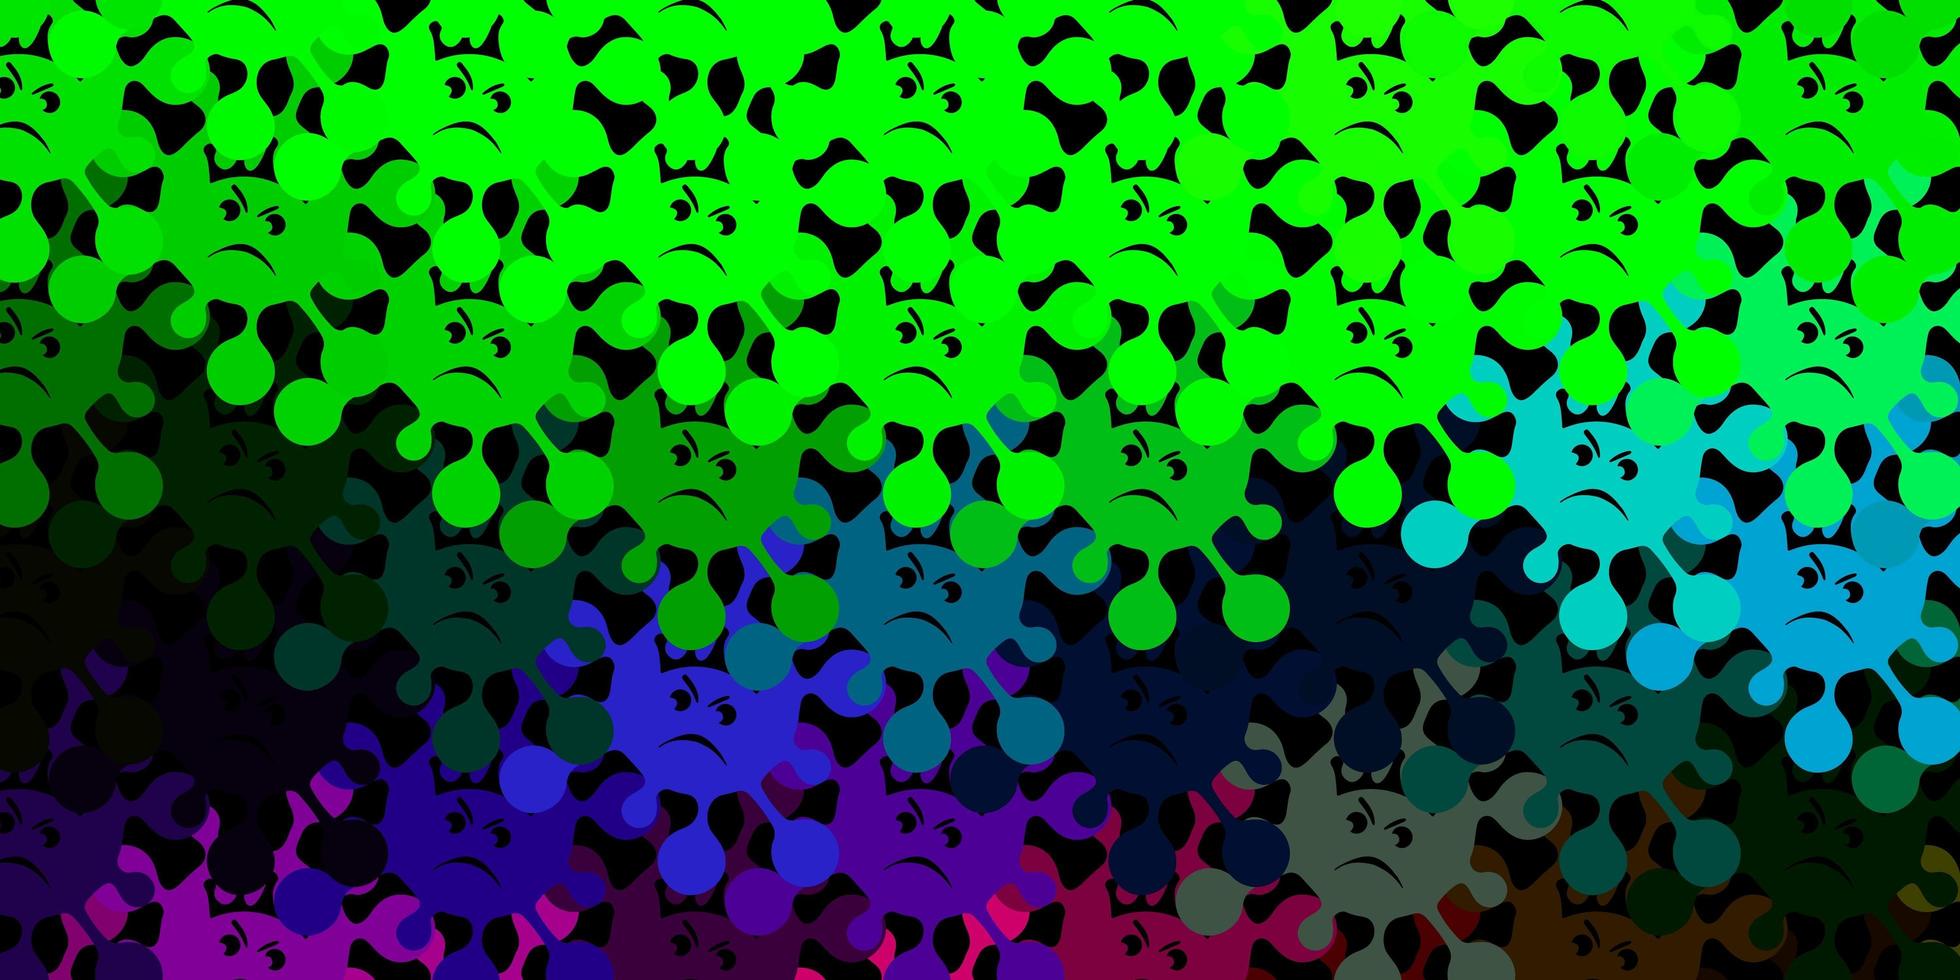 Dark multicolor vector pattern with coronavirus elements.